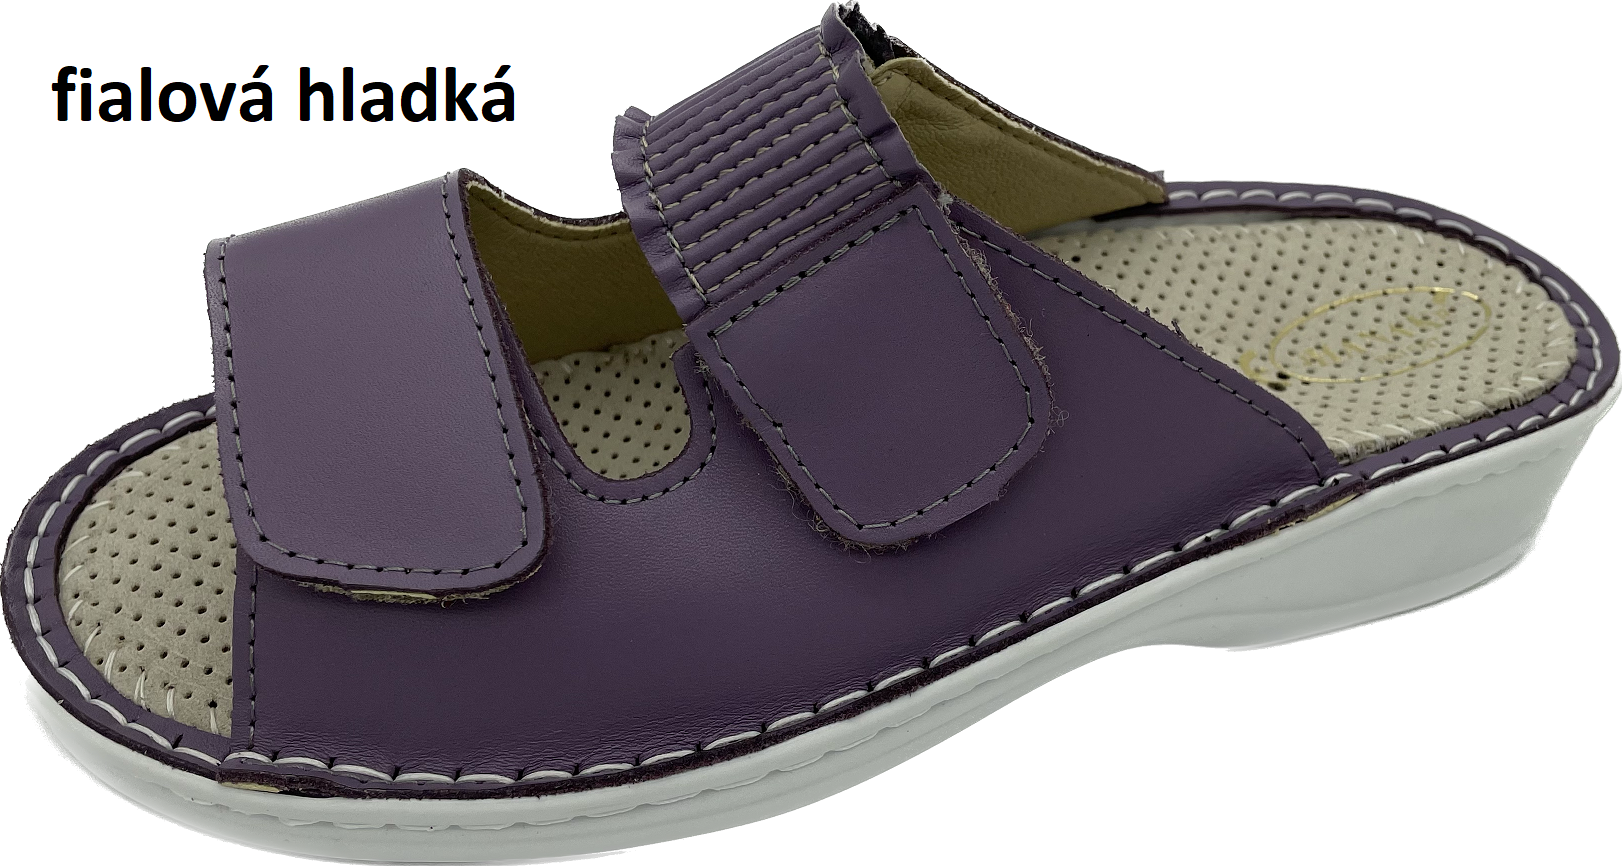 Boty Hanák vzor 304 - bílá podešev Barva usně: fialová hladká, Velikosti obuvi: 38